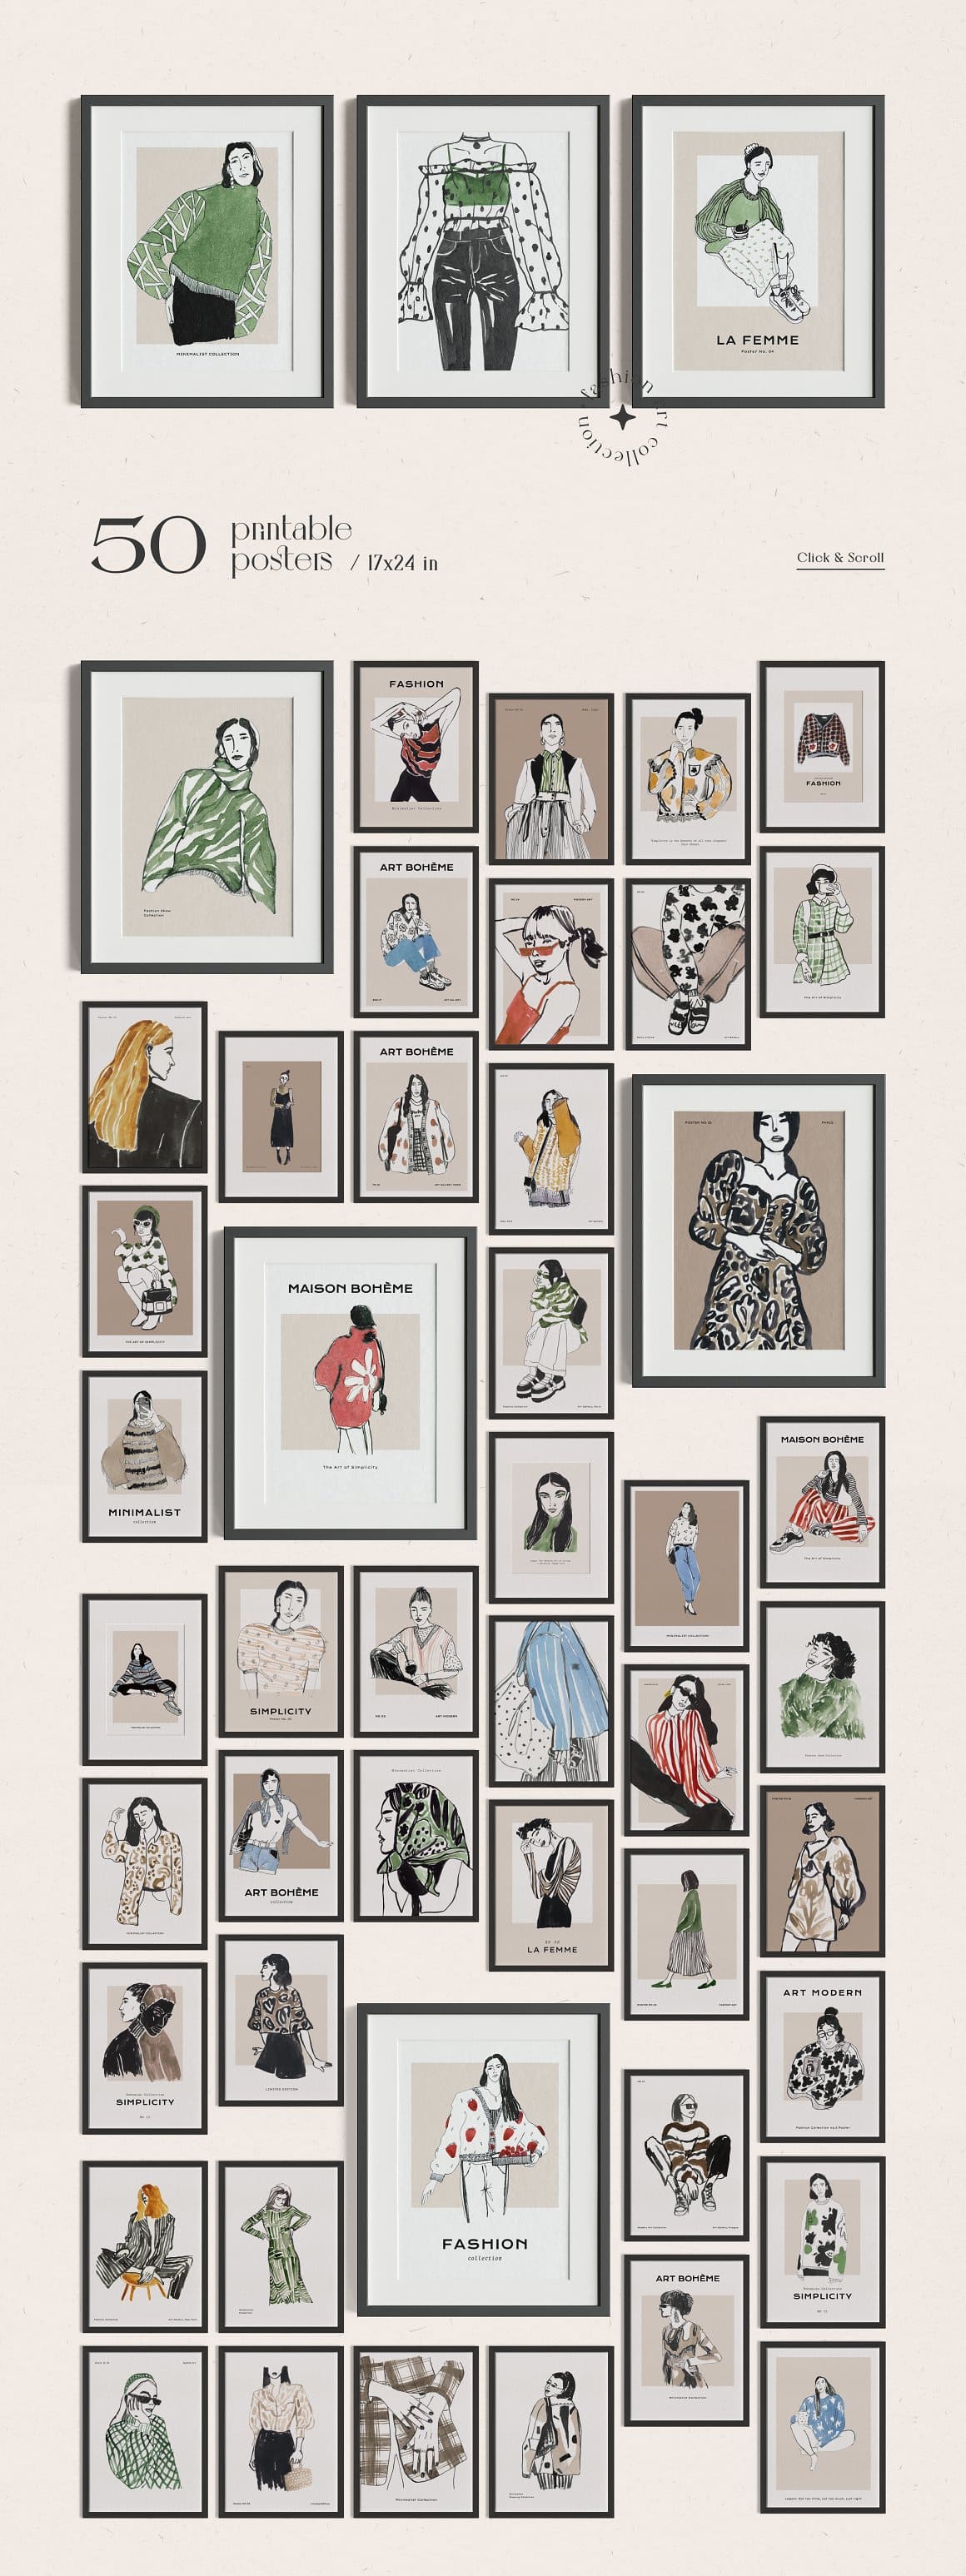 50 printable posters of fashion.